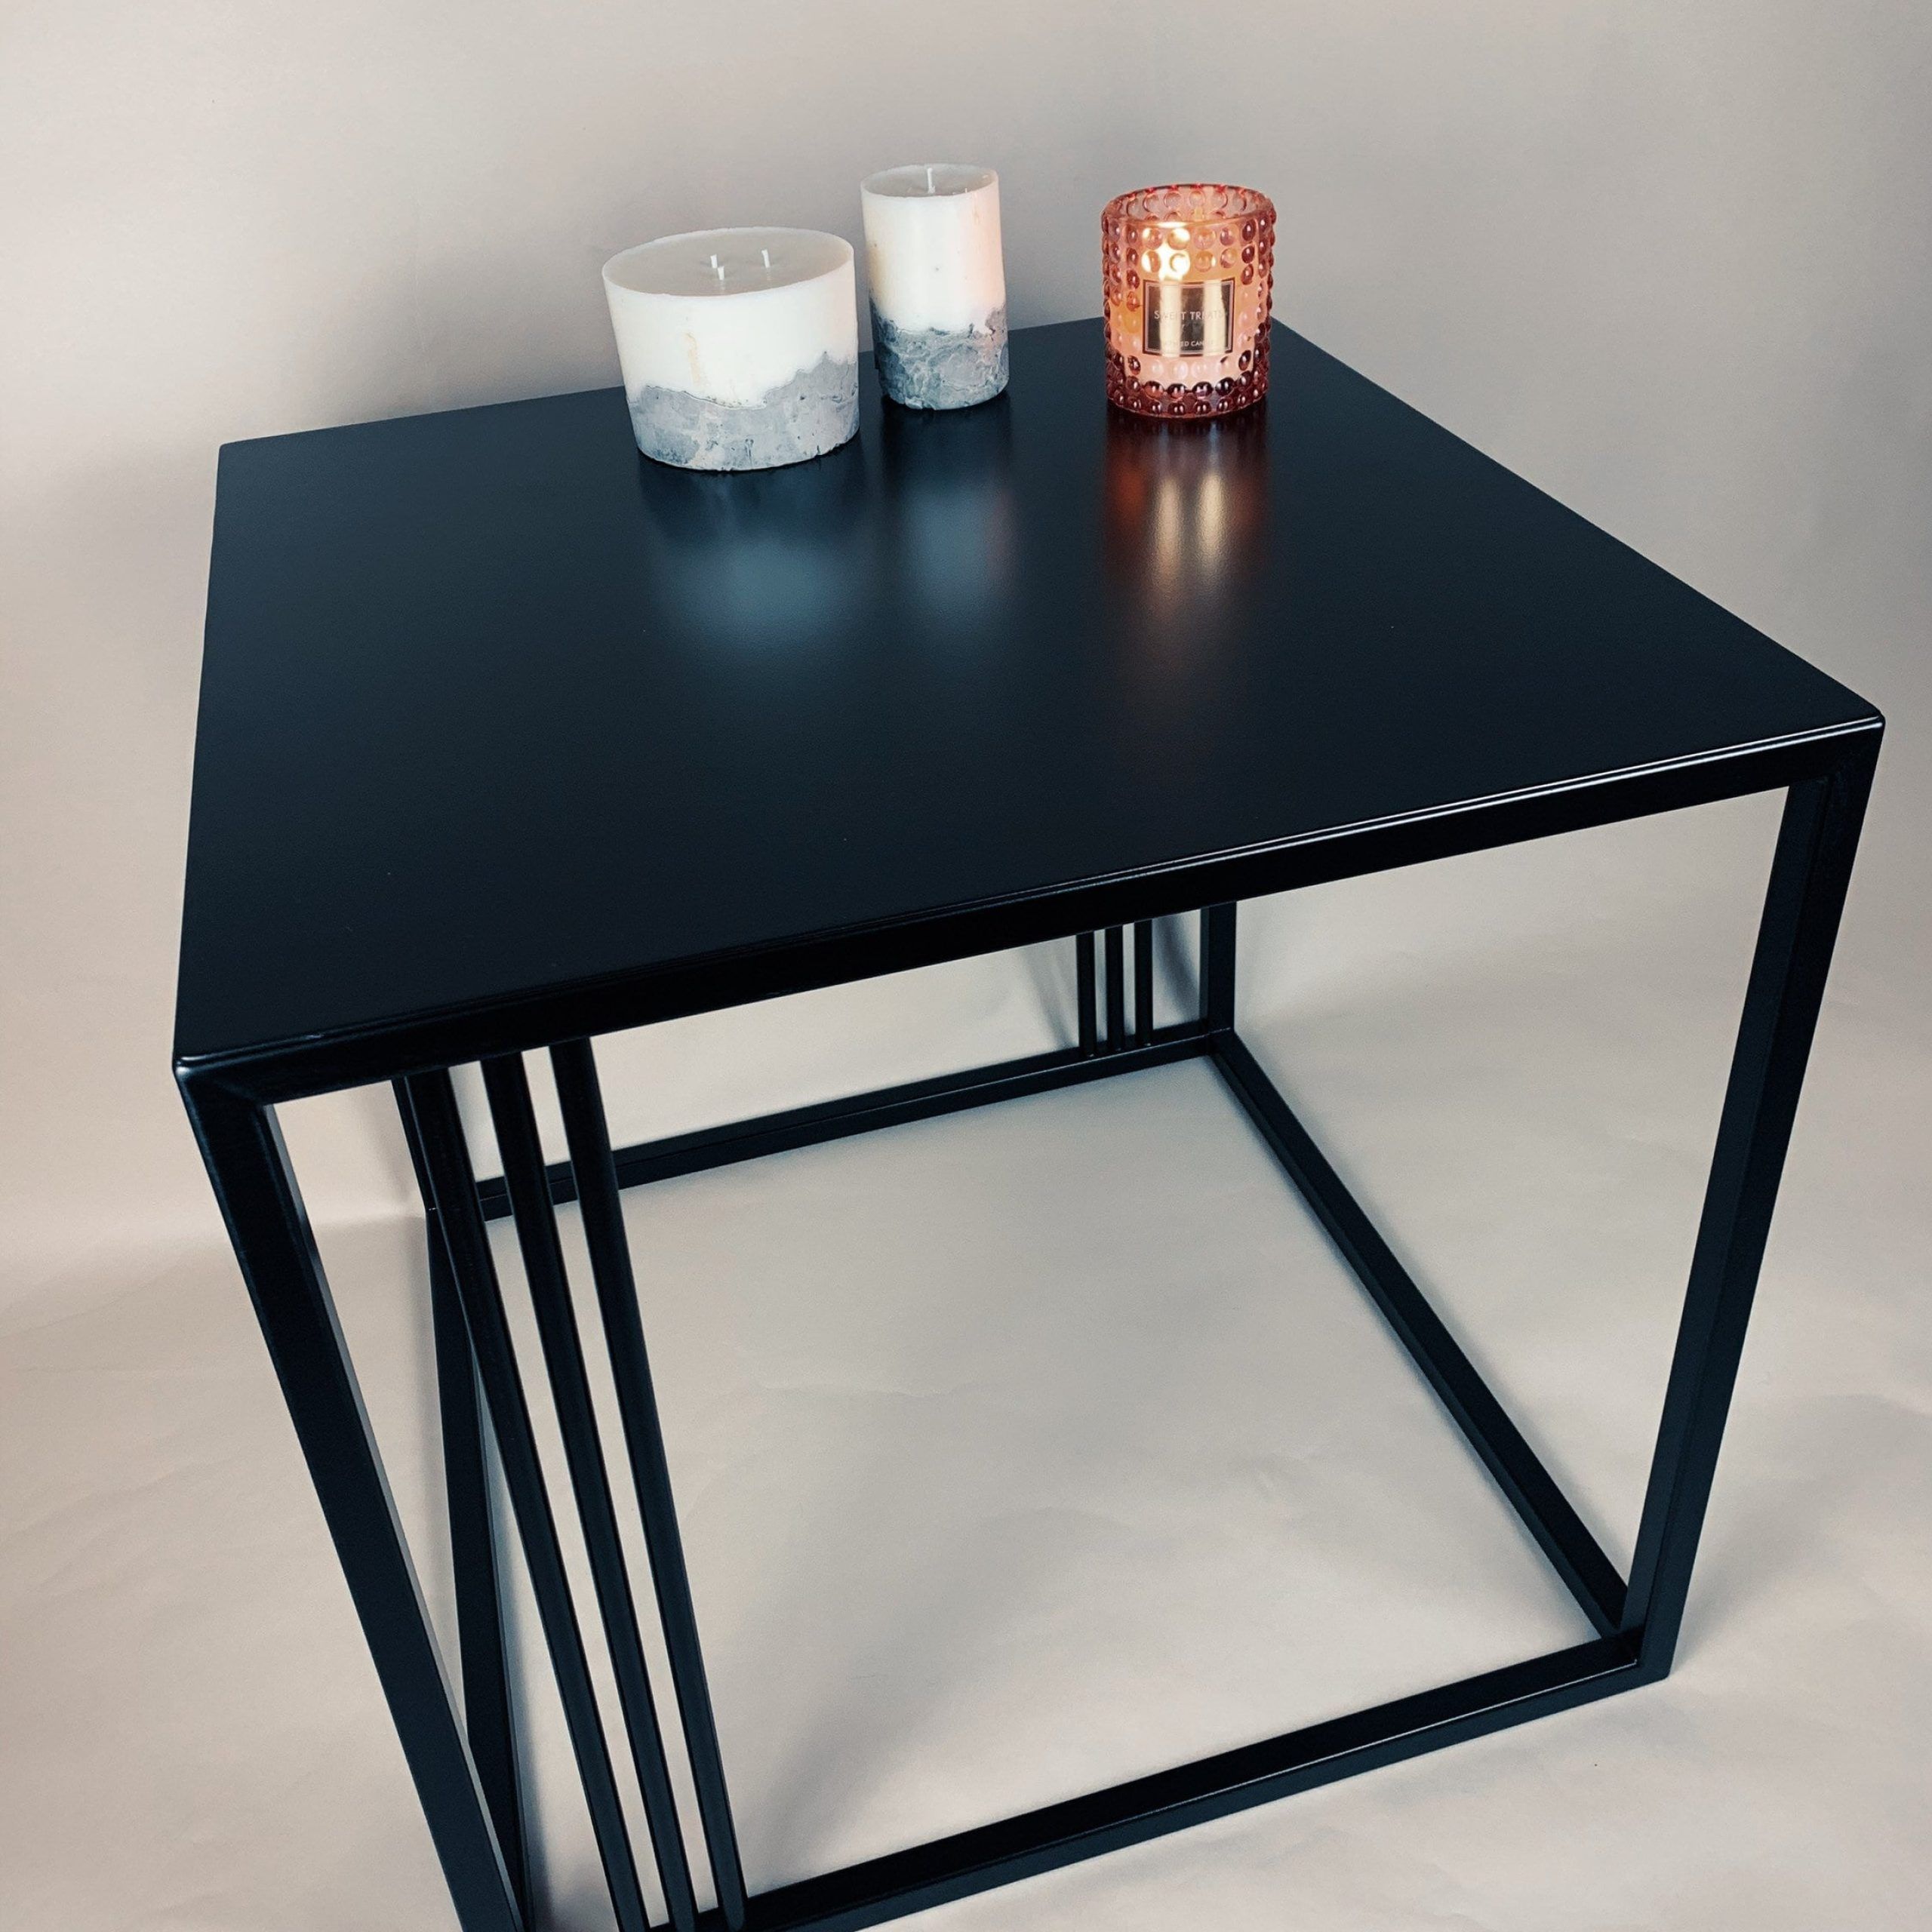 Black Steel Table Coffee Table Side Table Living Room | Etsy Within Studio 350 Black Metal Coffee Tables (Gallery 10 of 20)